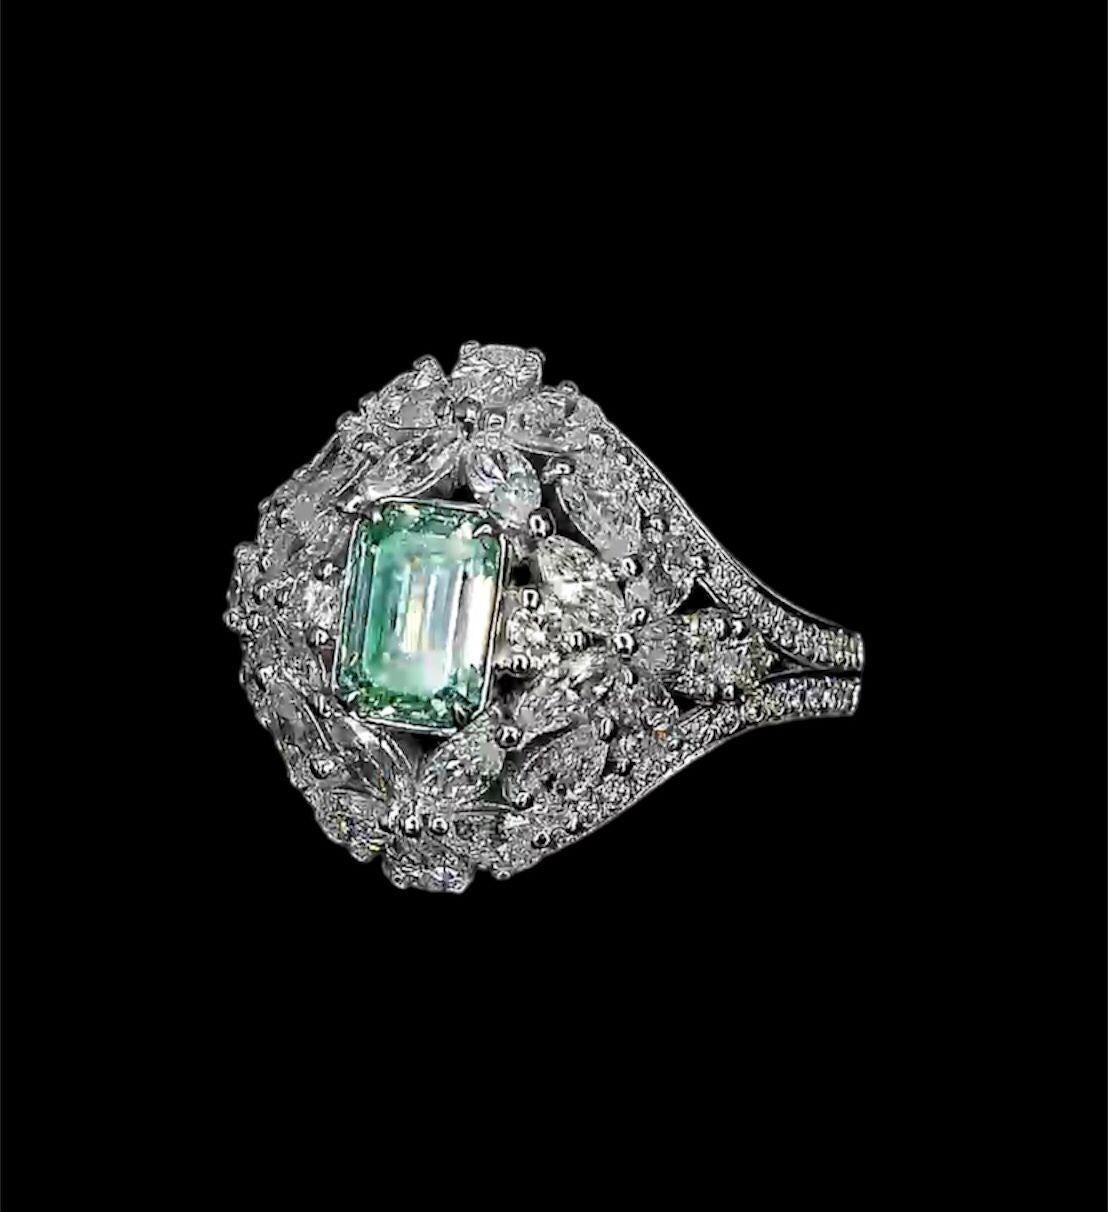 Emerald Cut 0.82 Carat Light Yellow-Green Diamond Ring SI2 Clarity GIA Certified For Sale